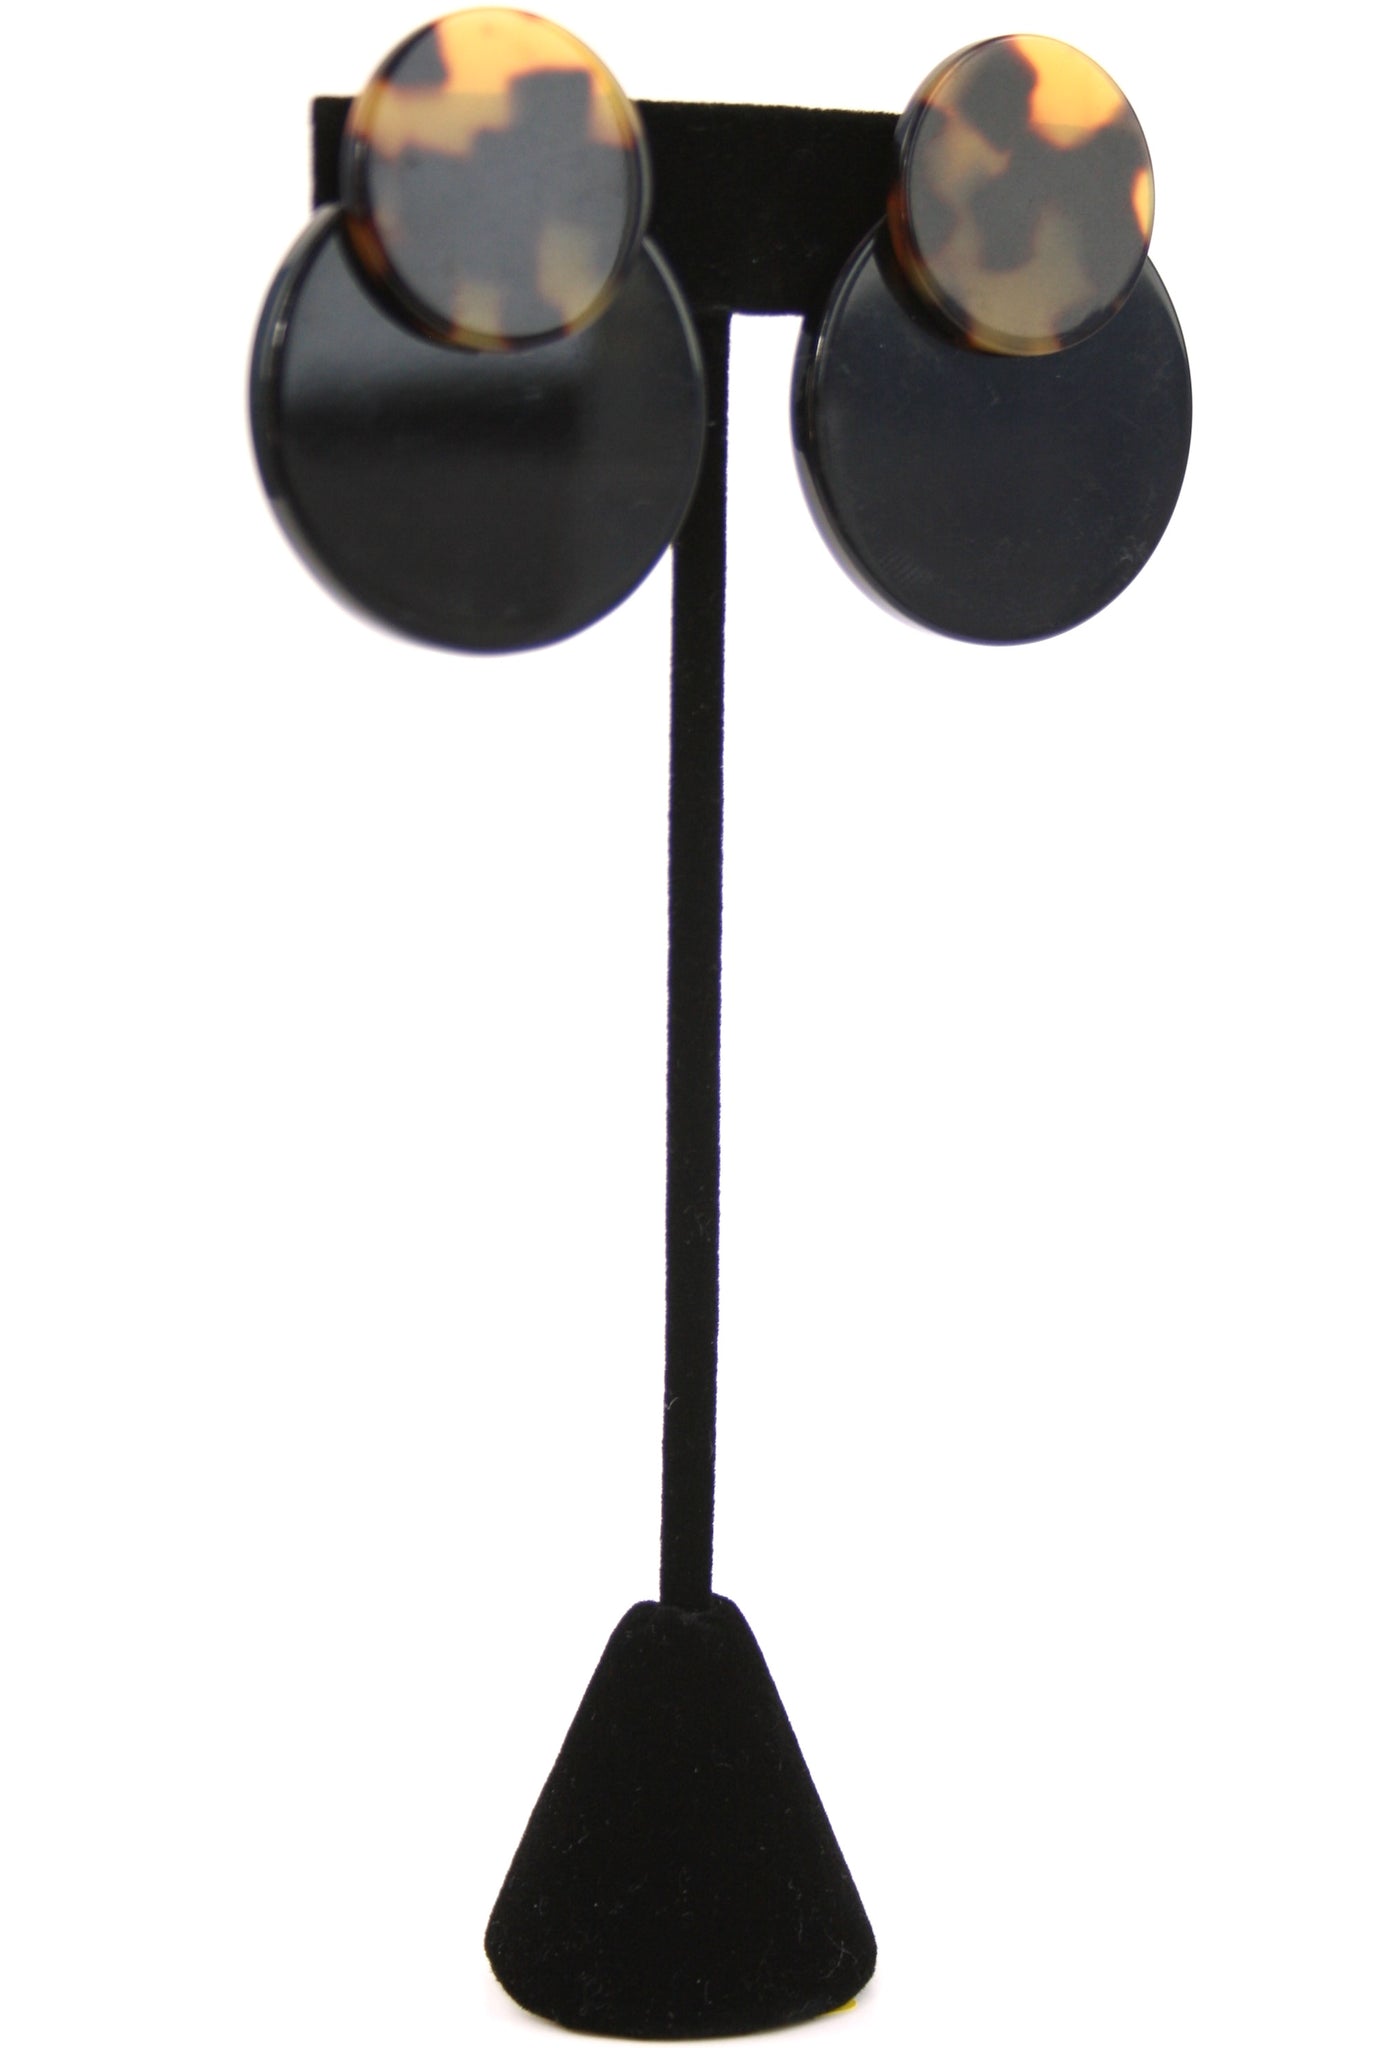 clip on resin earrings in tortoise and black